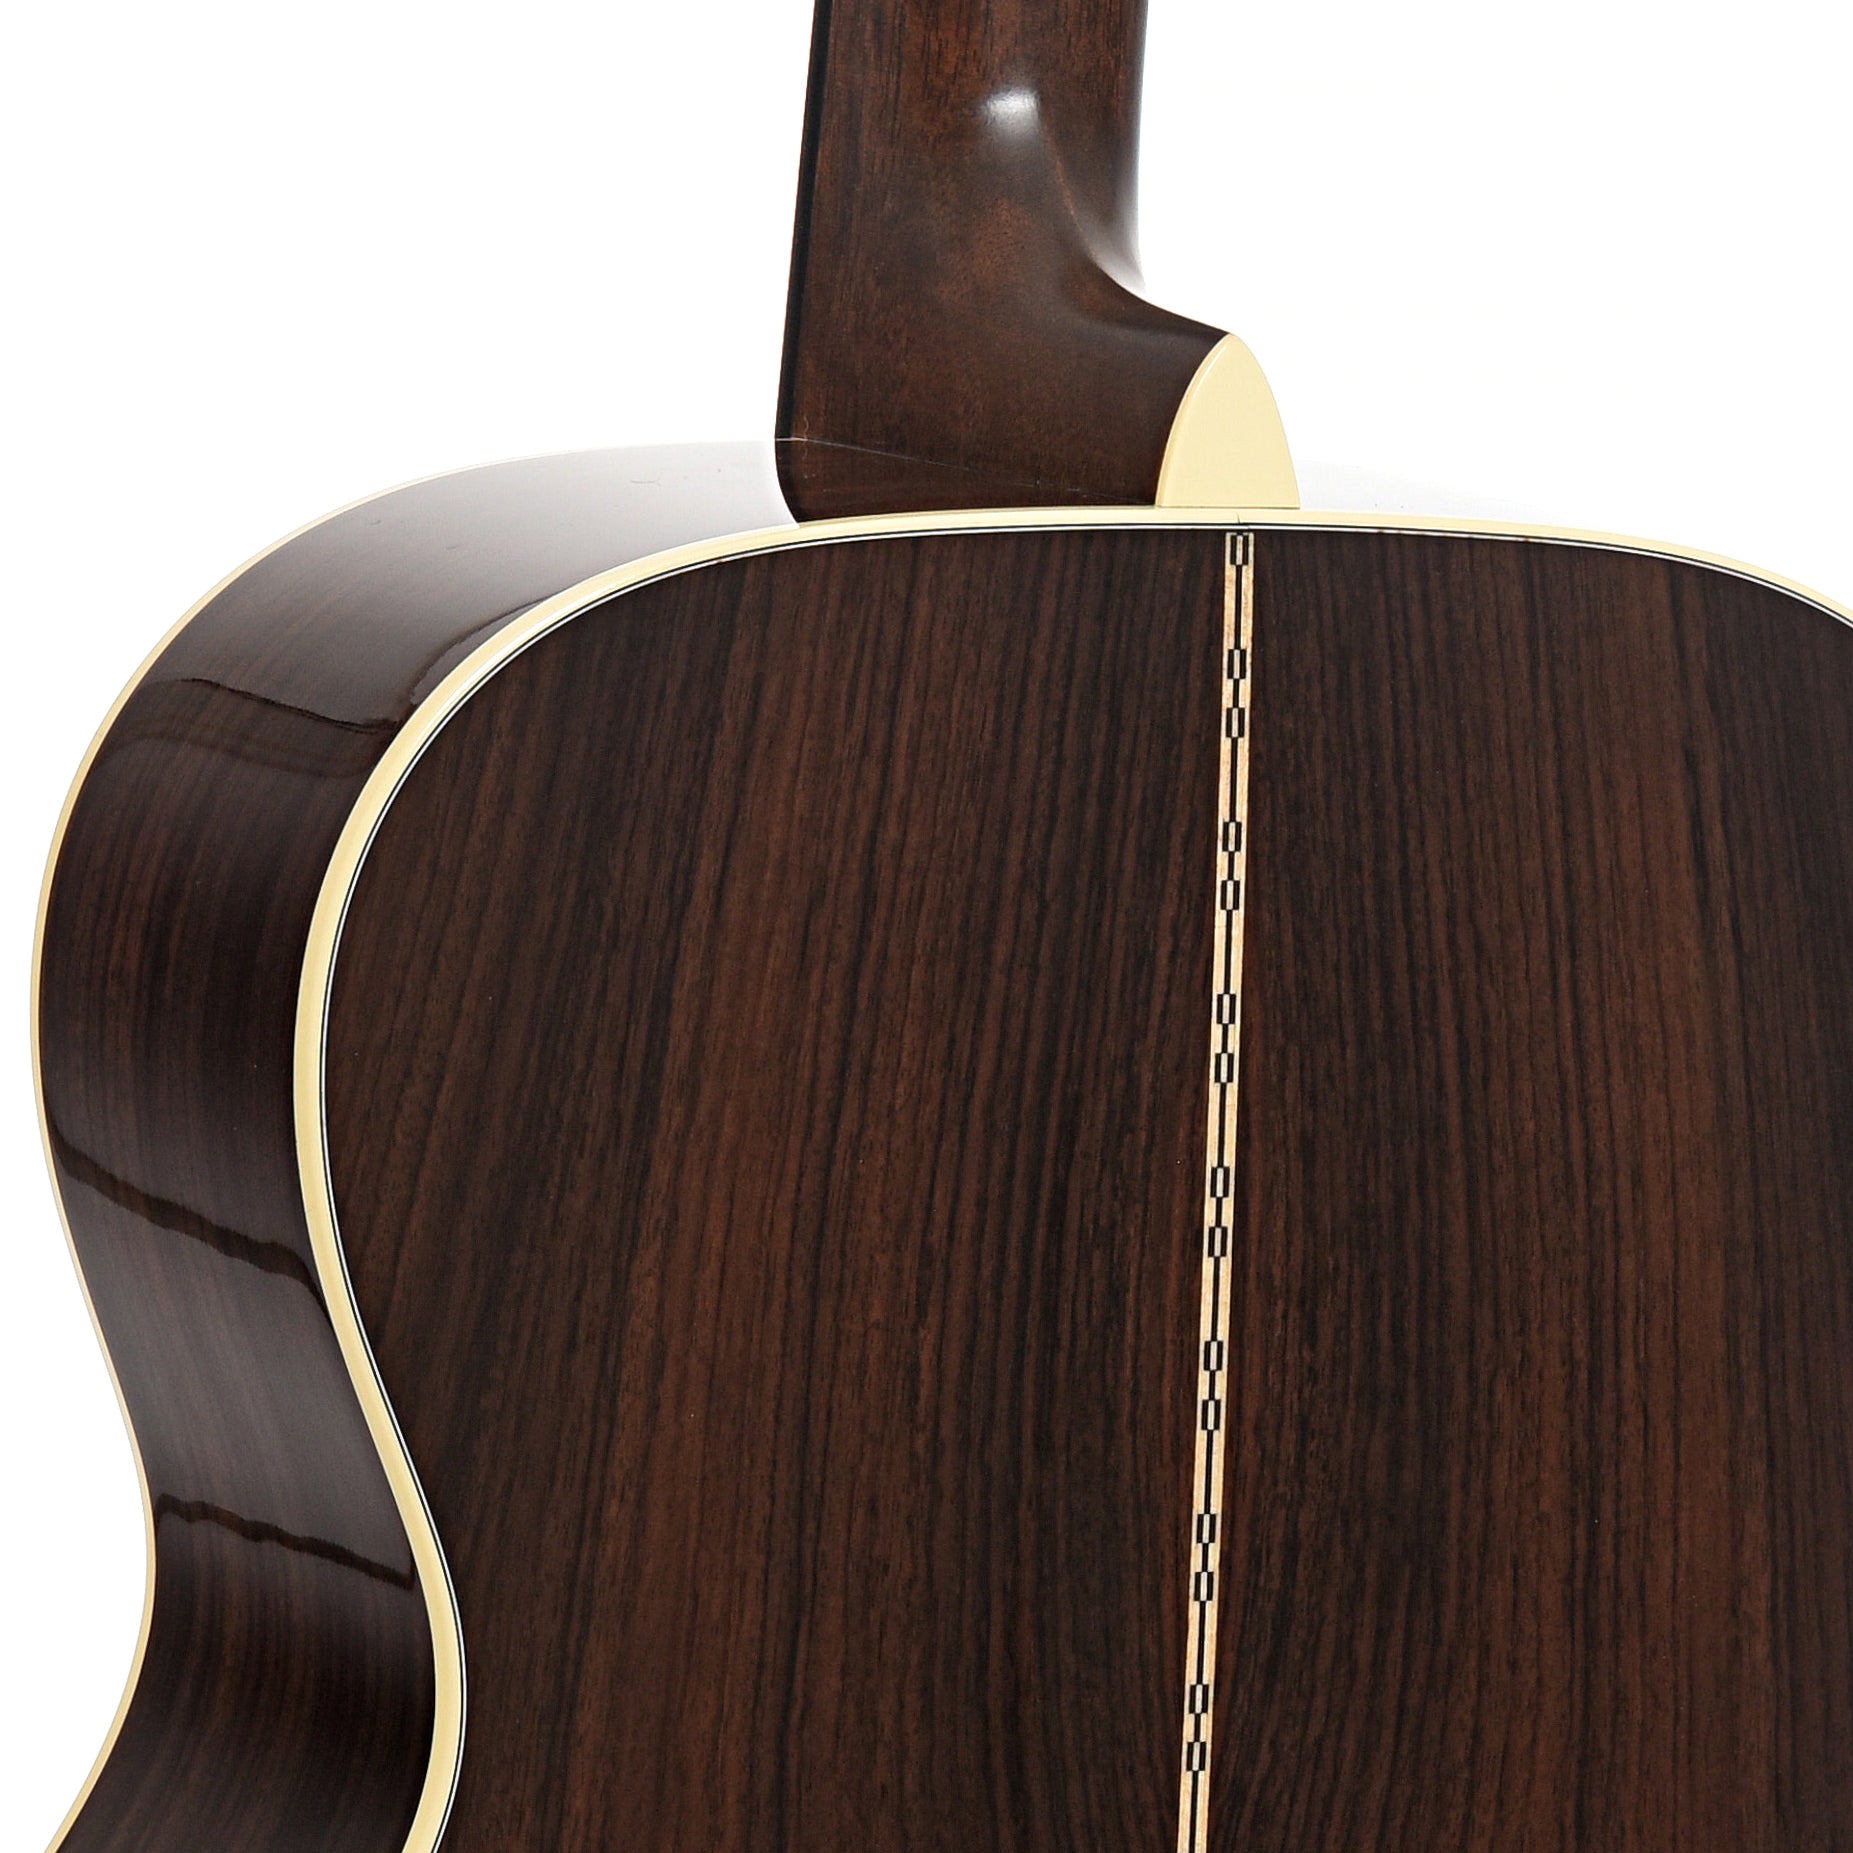 Neckjoint of Martin Custom 28-Style 000 Guitar & Case, Wild Grain Rosewood & Adirondack Spruce